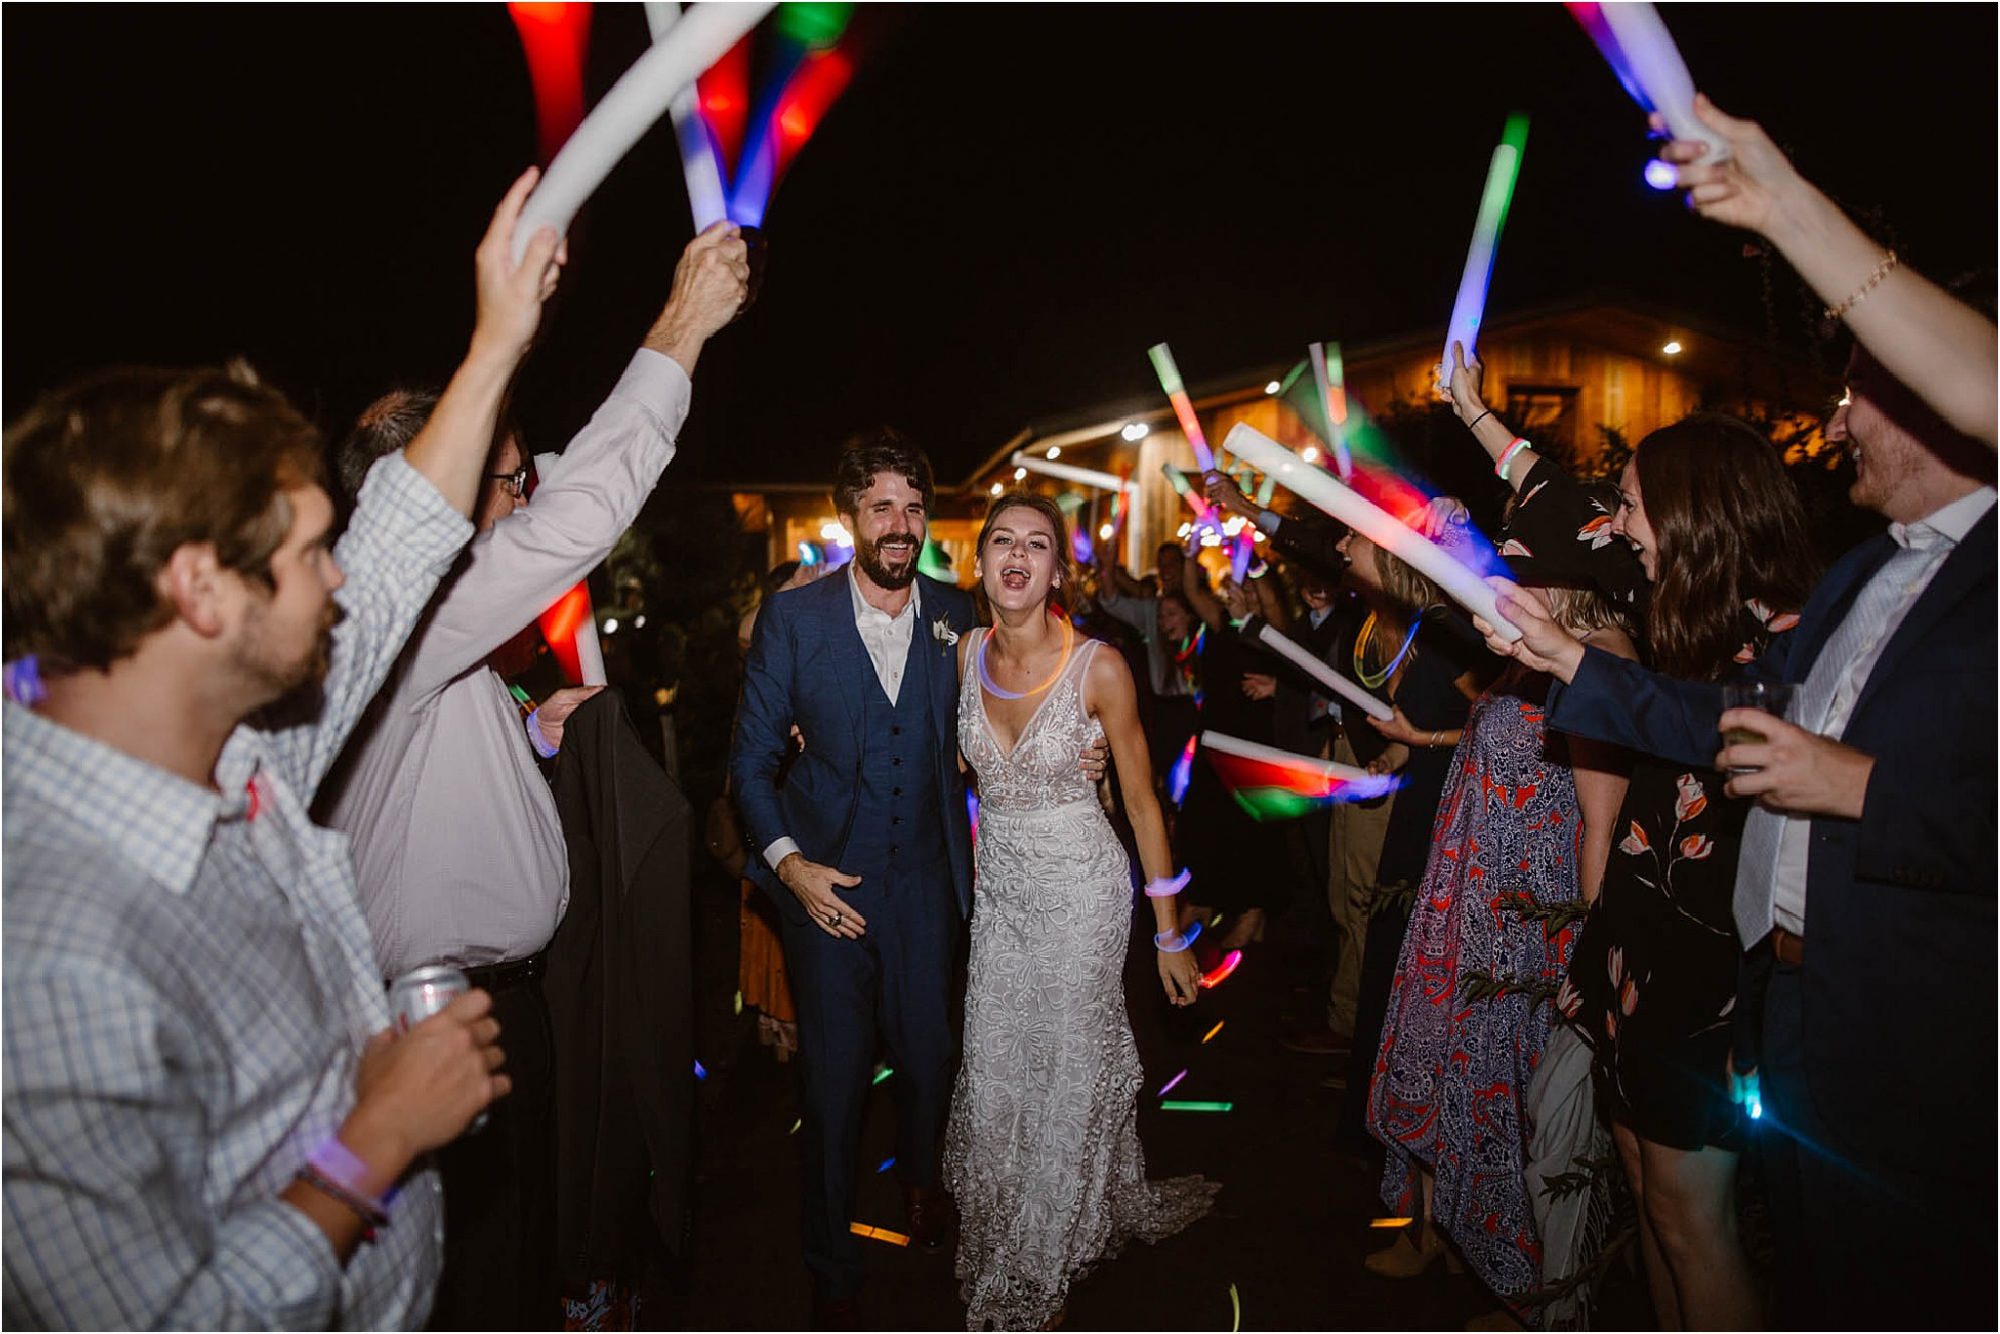 glow stick exit at wedding